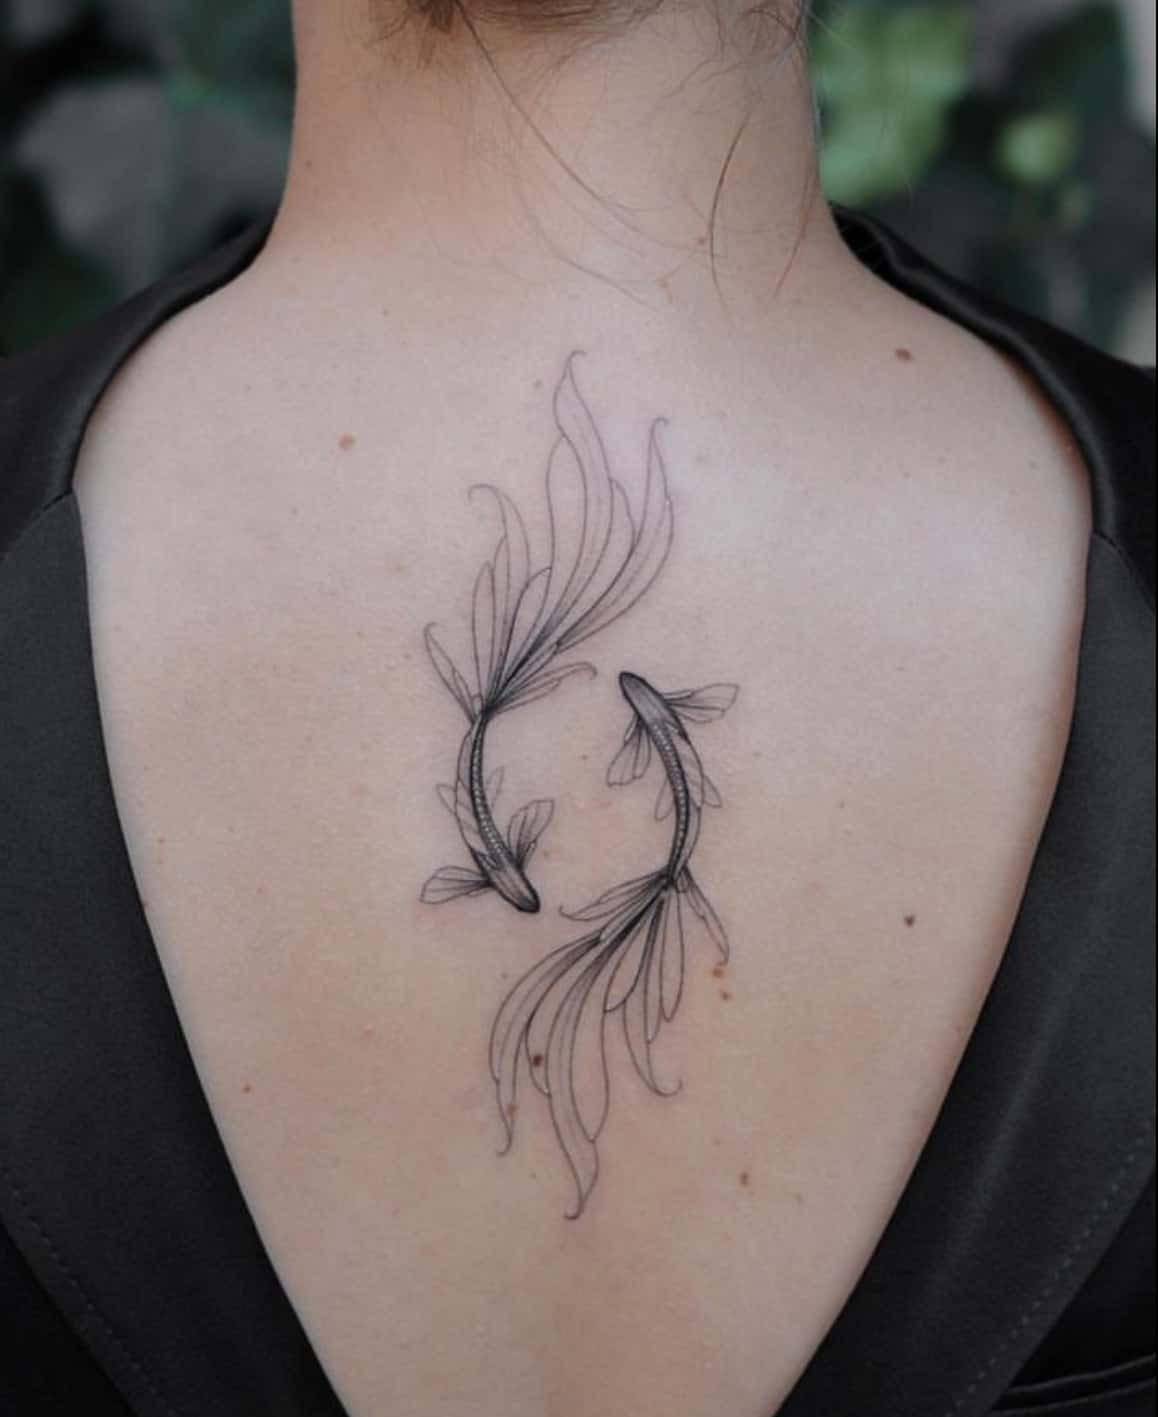 Pisces zodiac sign | Temporary tattoos - minink